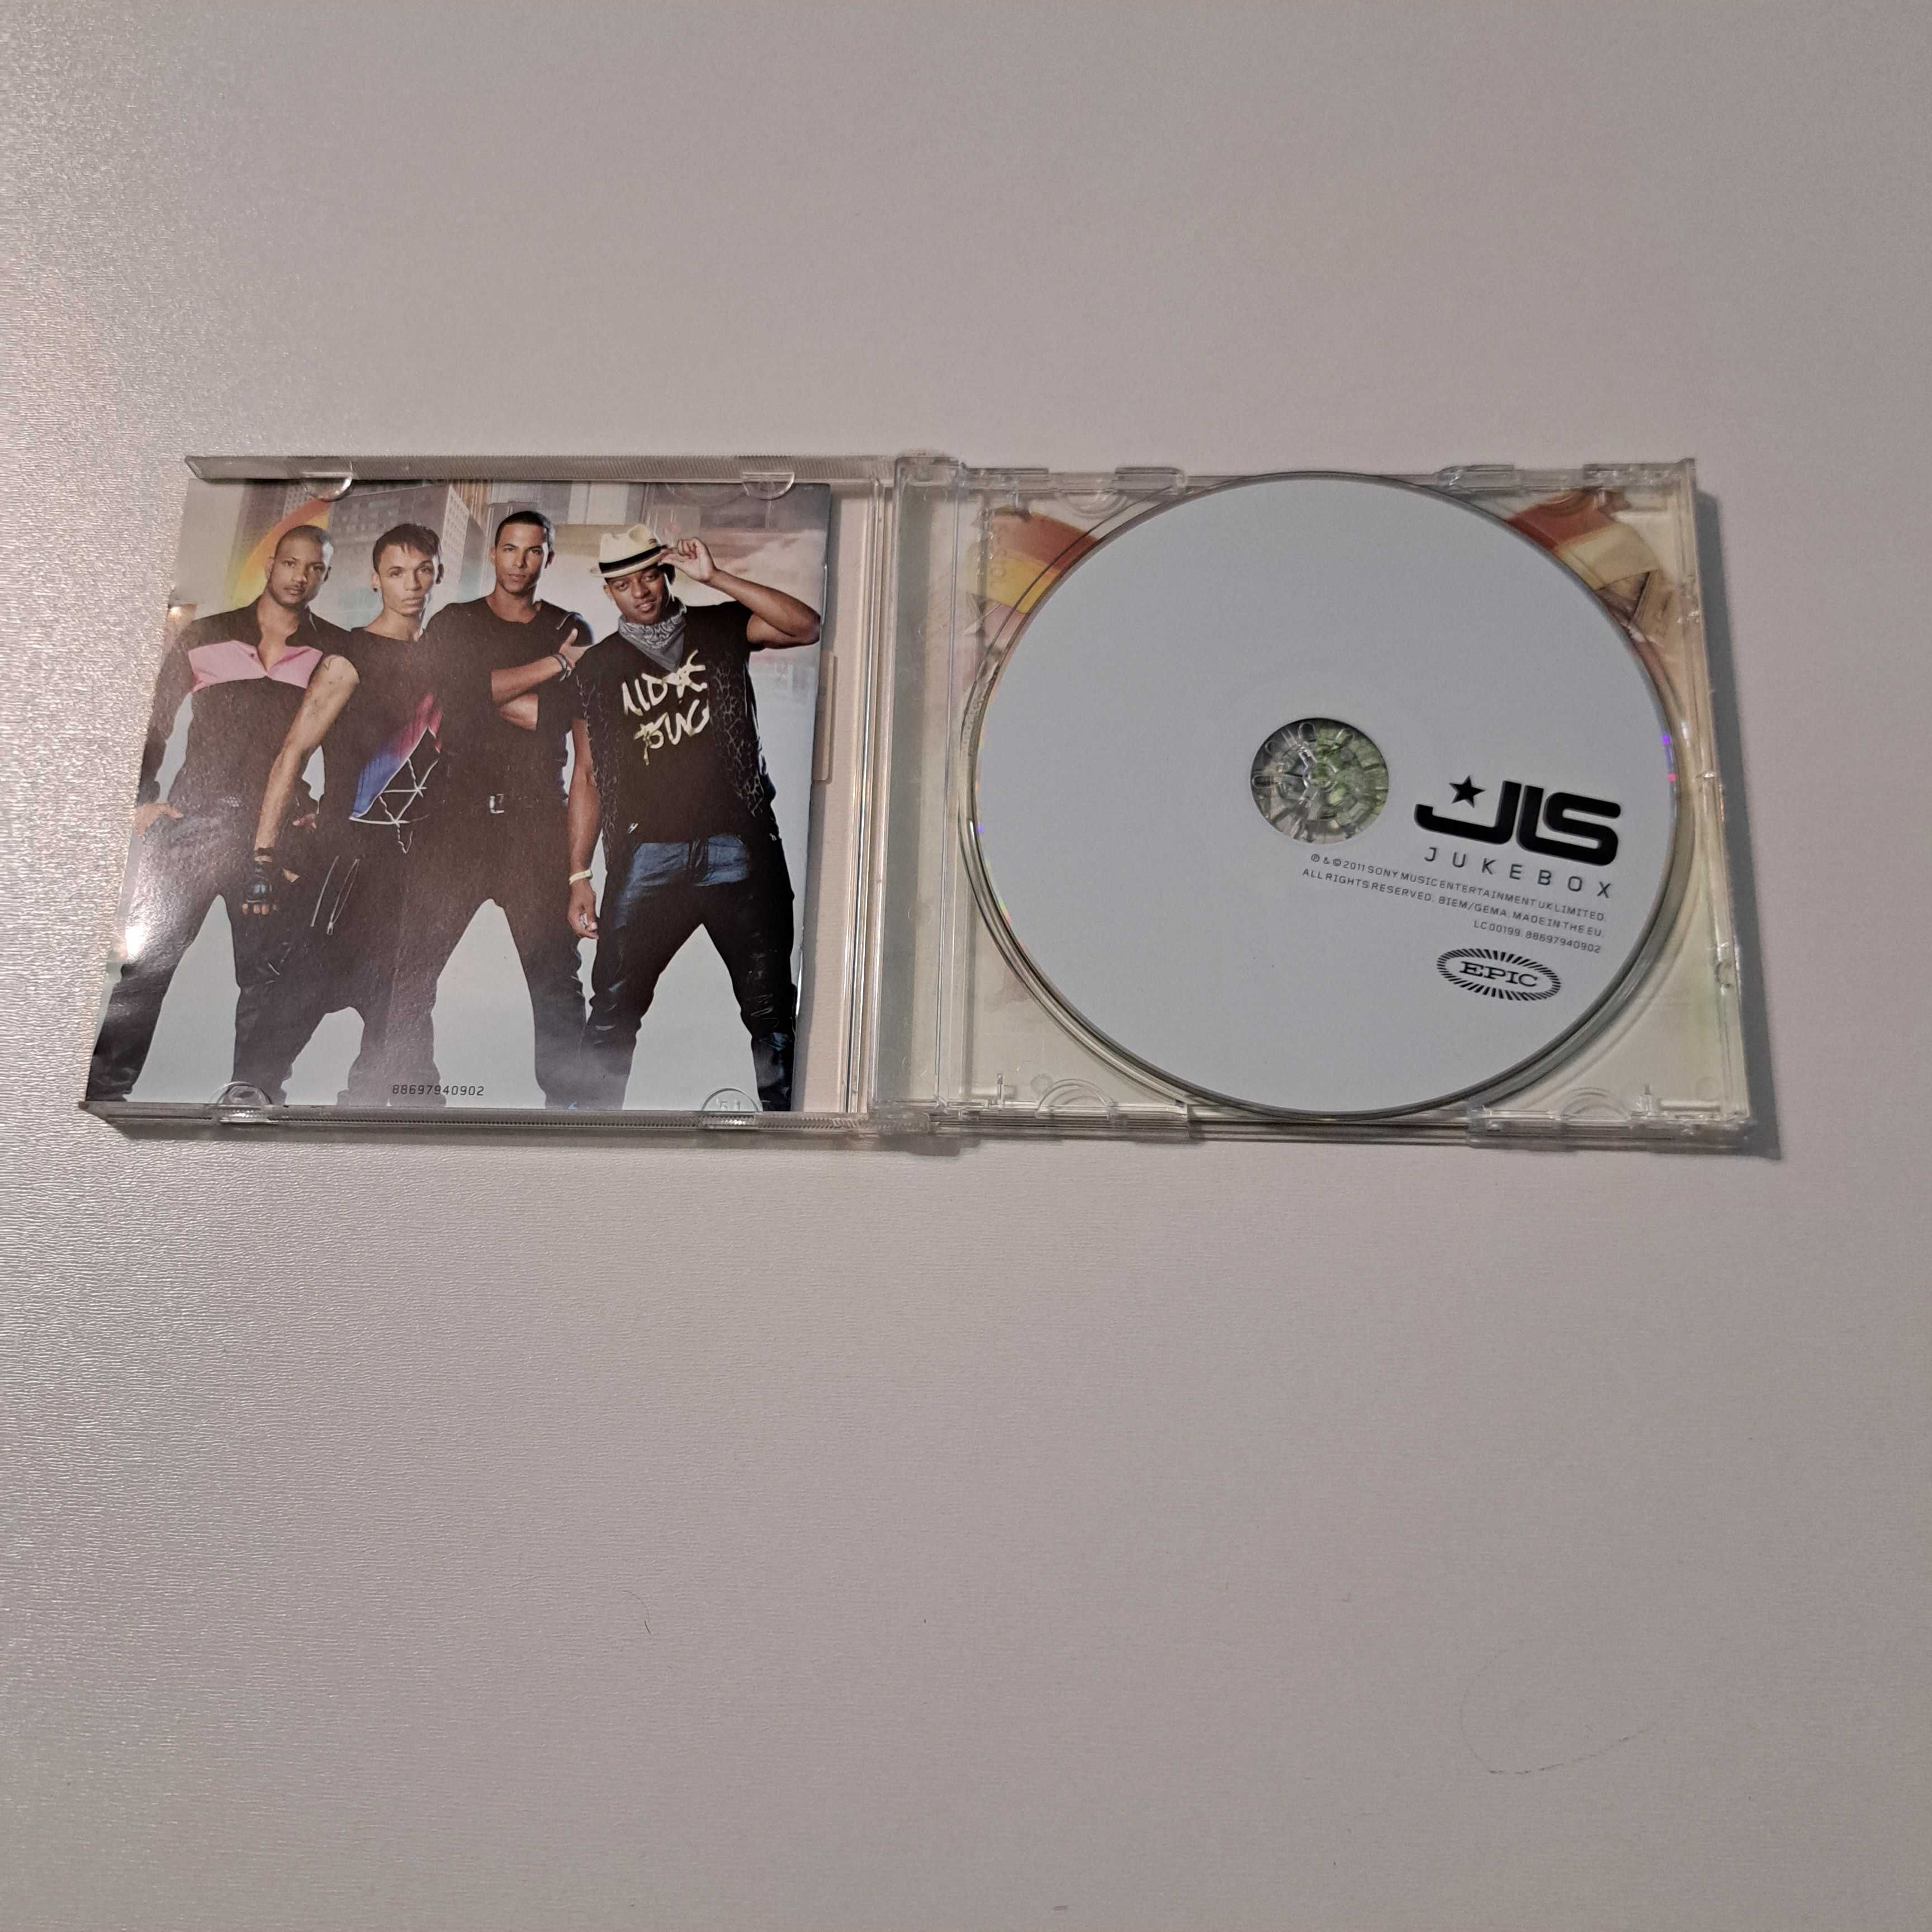 Płyta CD  JLS  Jukebox  nr656